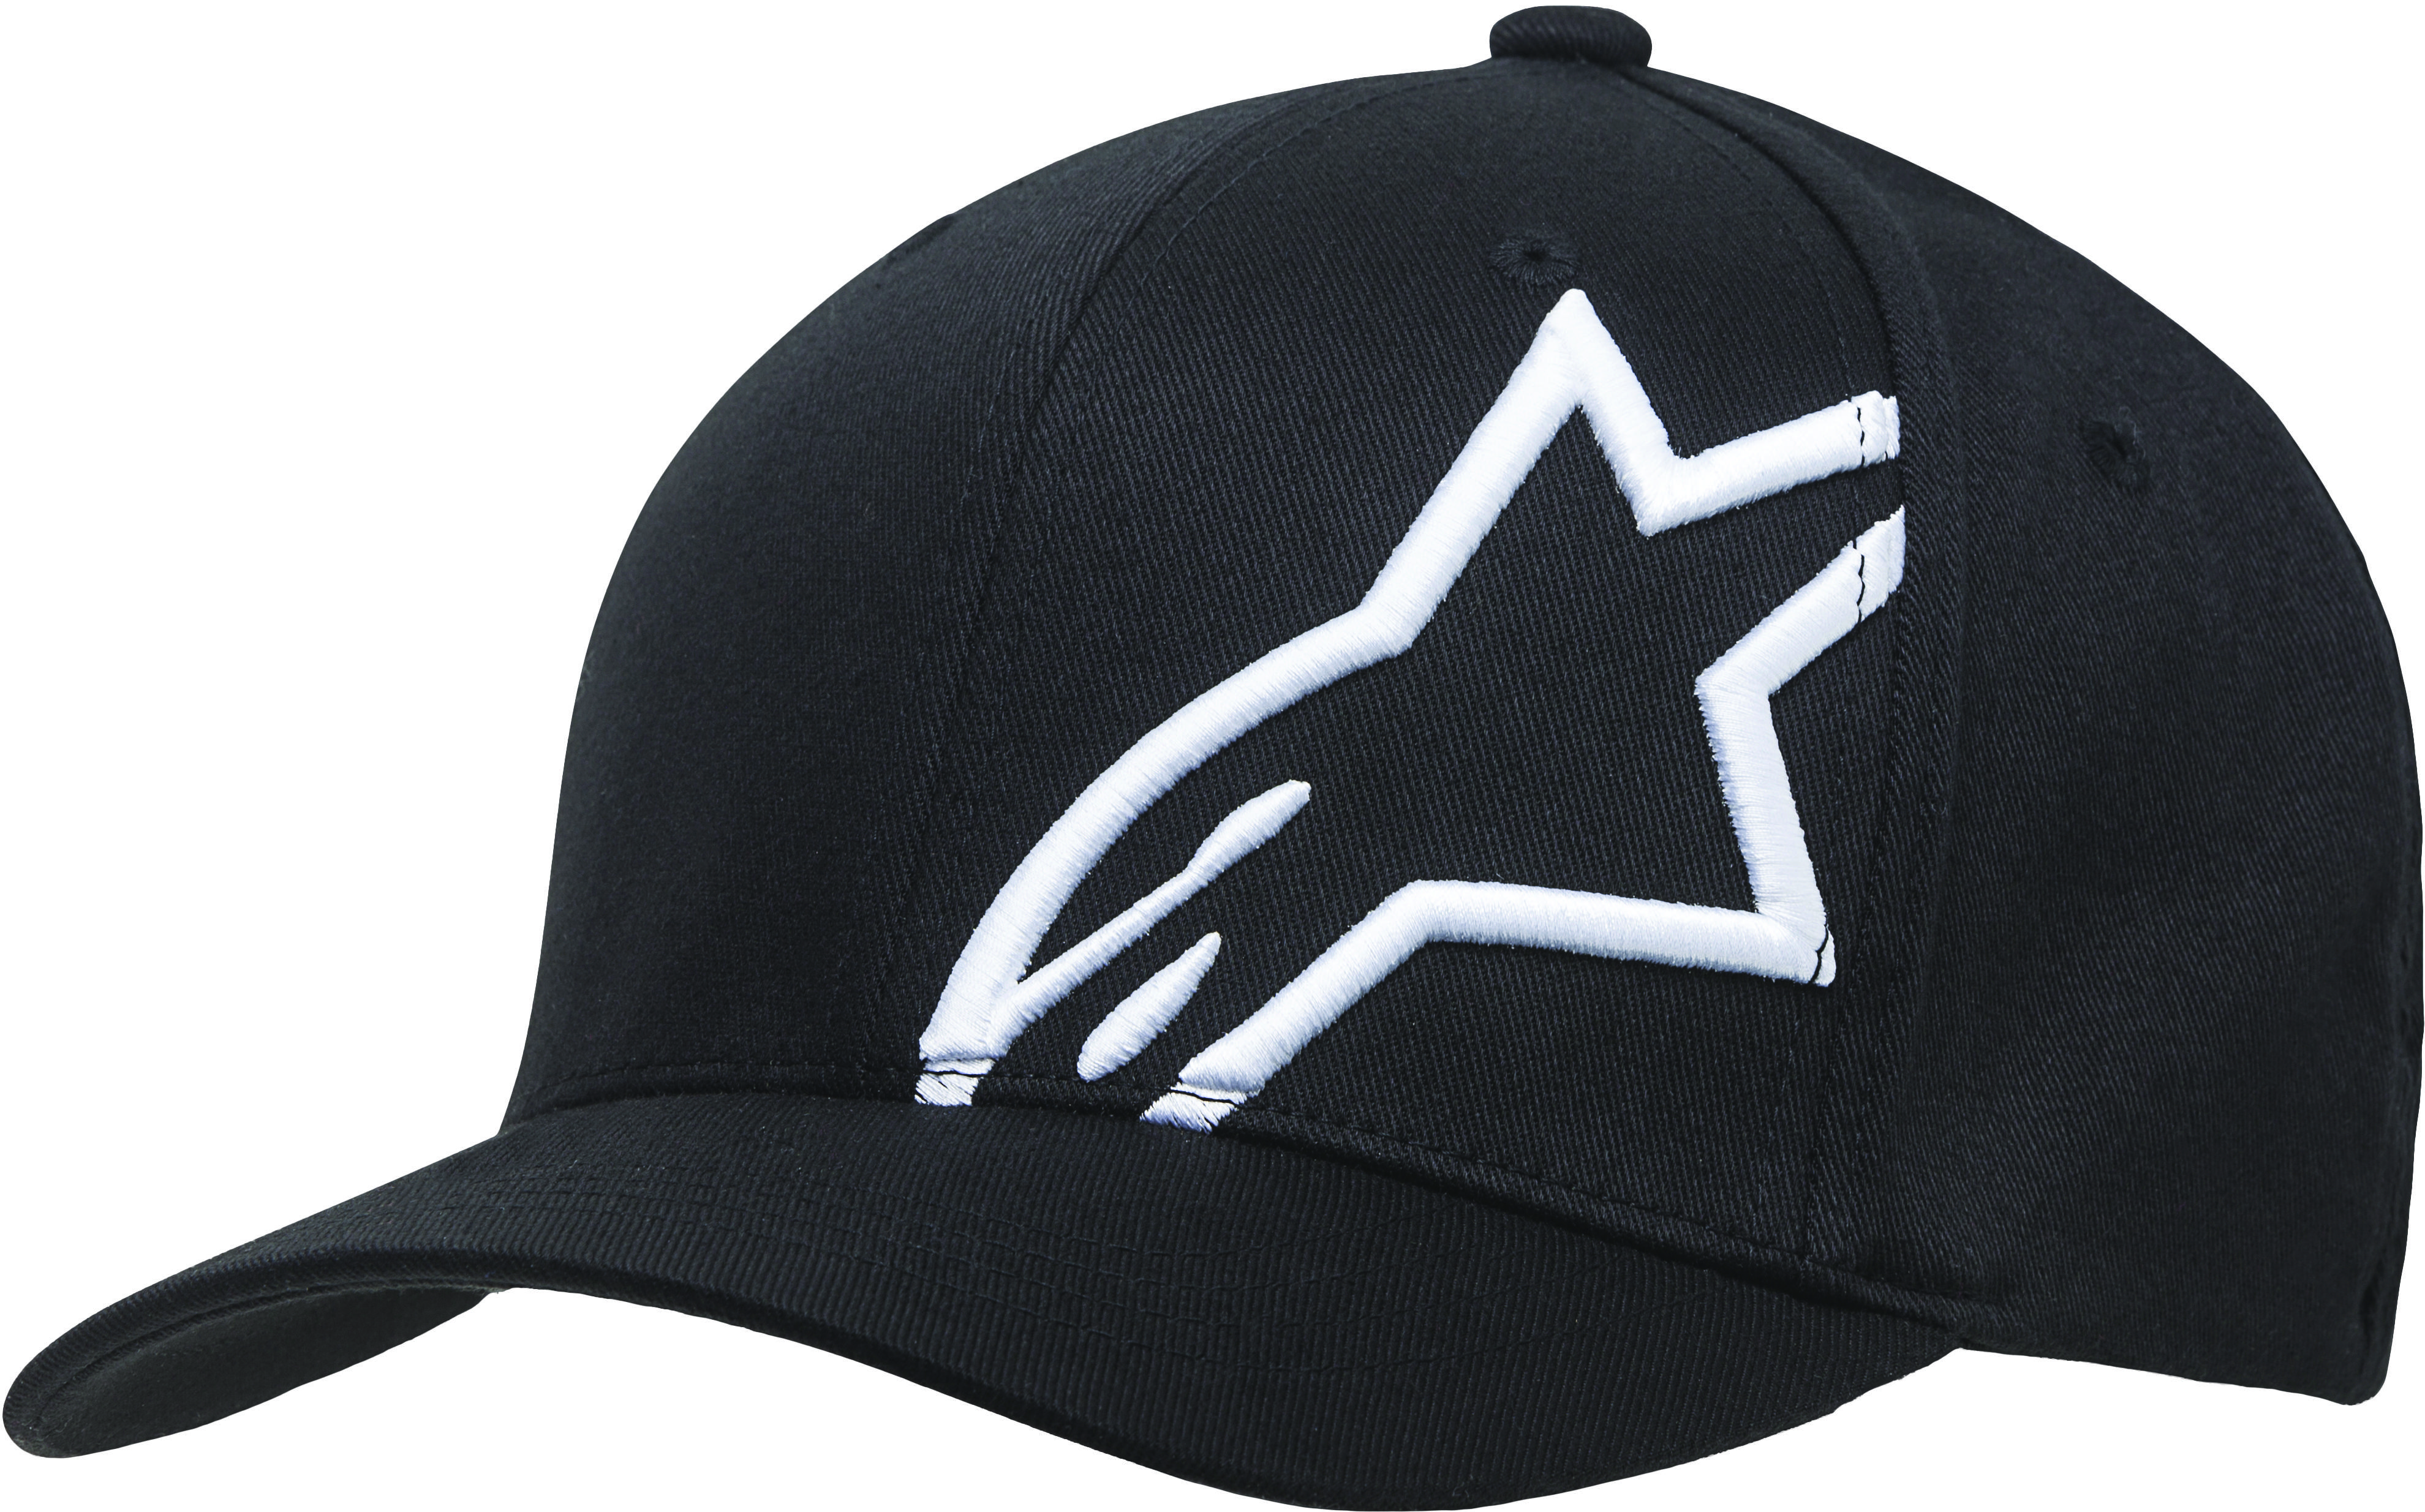 Corporate Shift 2 Curved Brim Hat Black/White Small/Medium - Click Image to Close